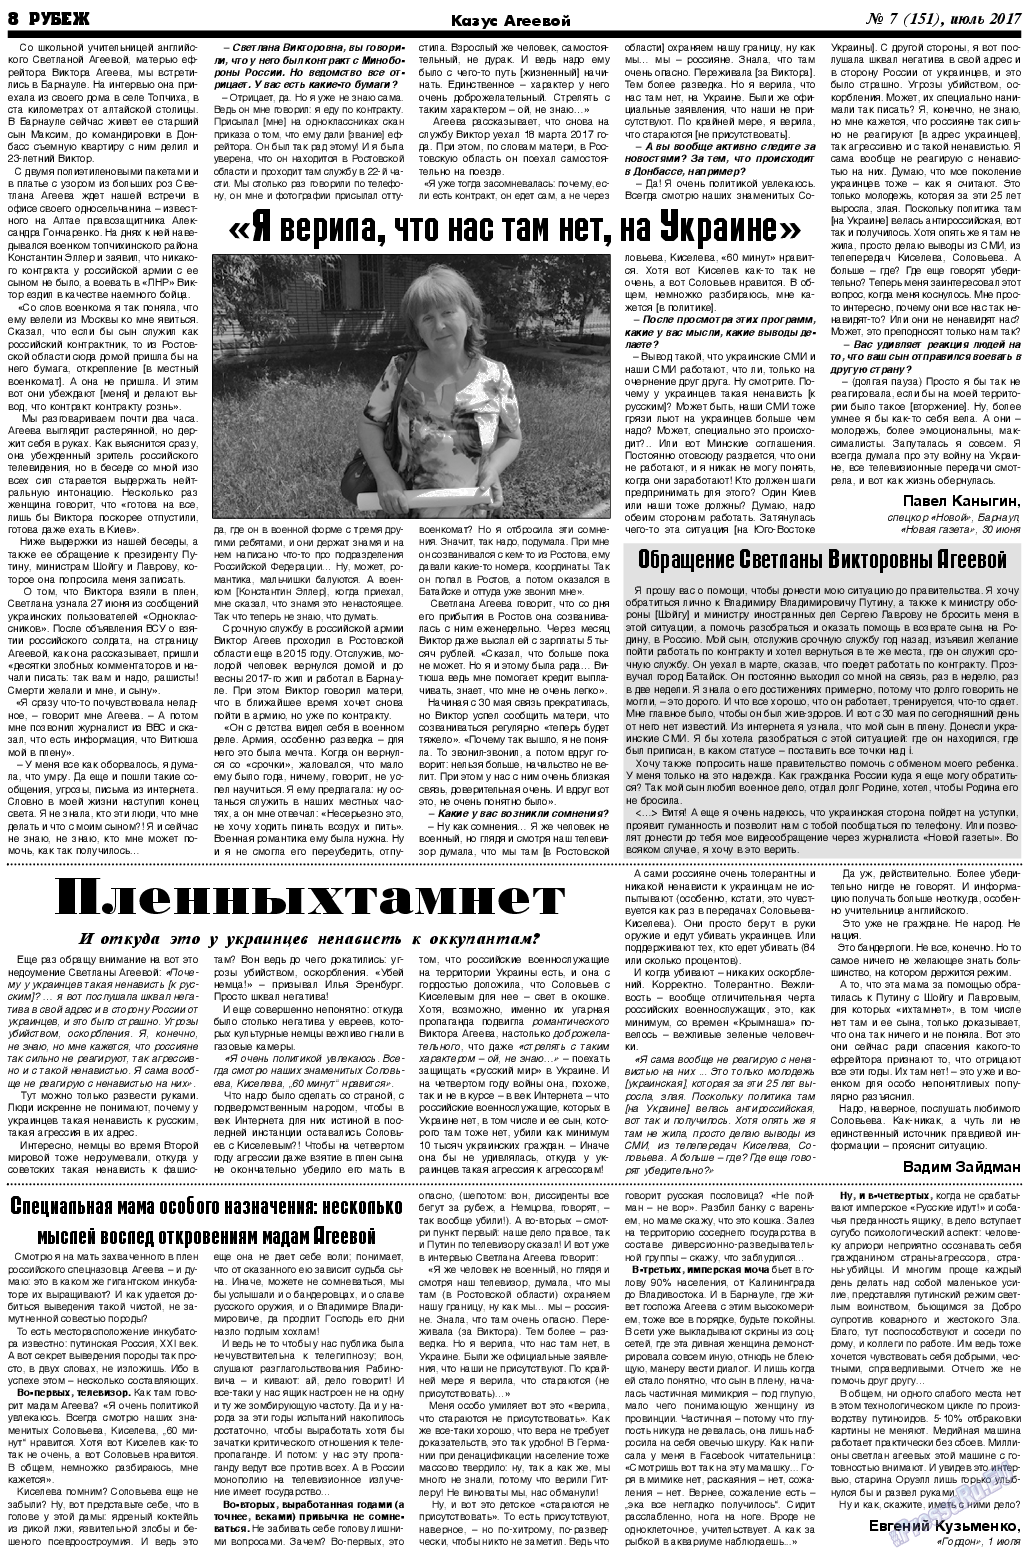 Рубеж, газета. 2017 №7 стр.8